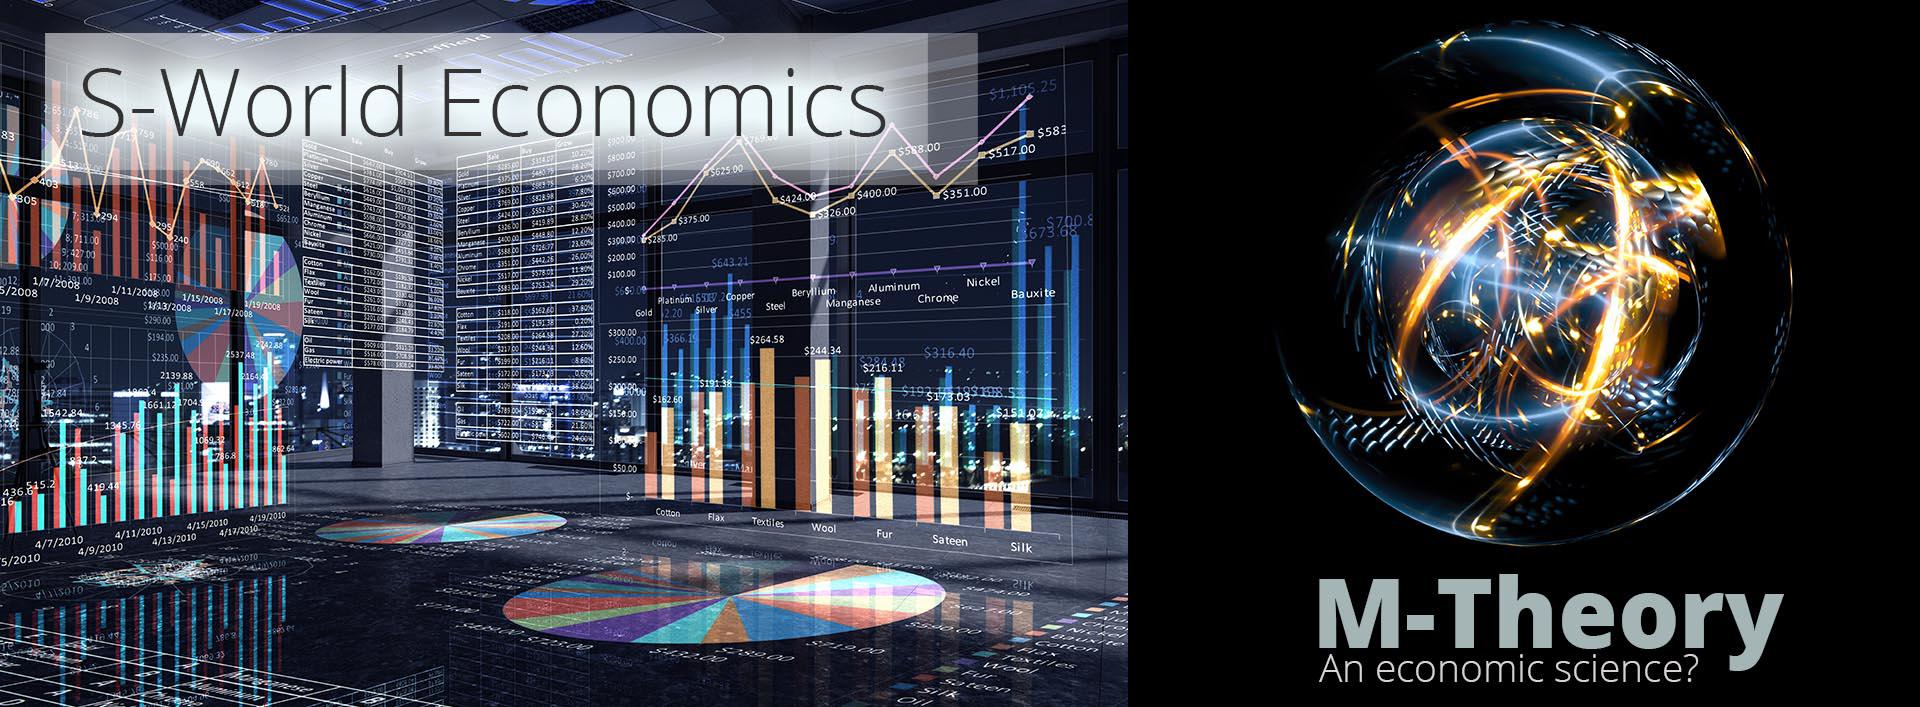 S-World Economics - M-Theory an Ecnomic Science